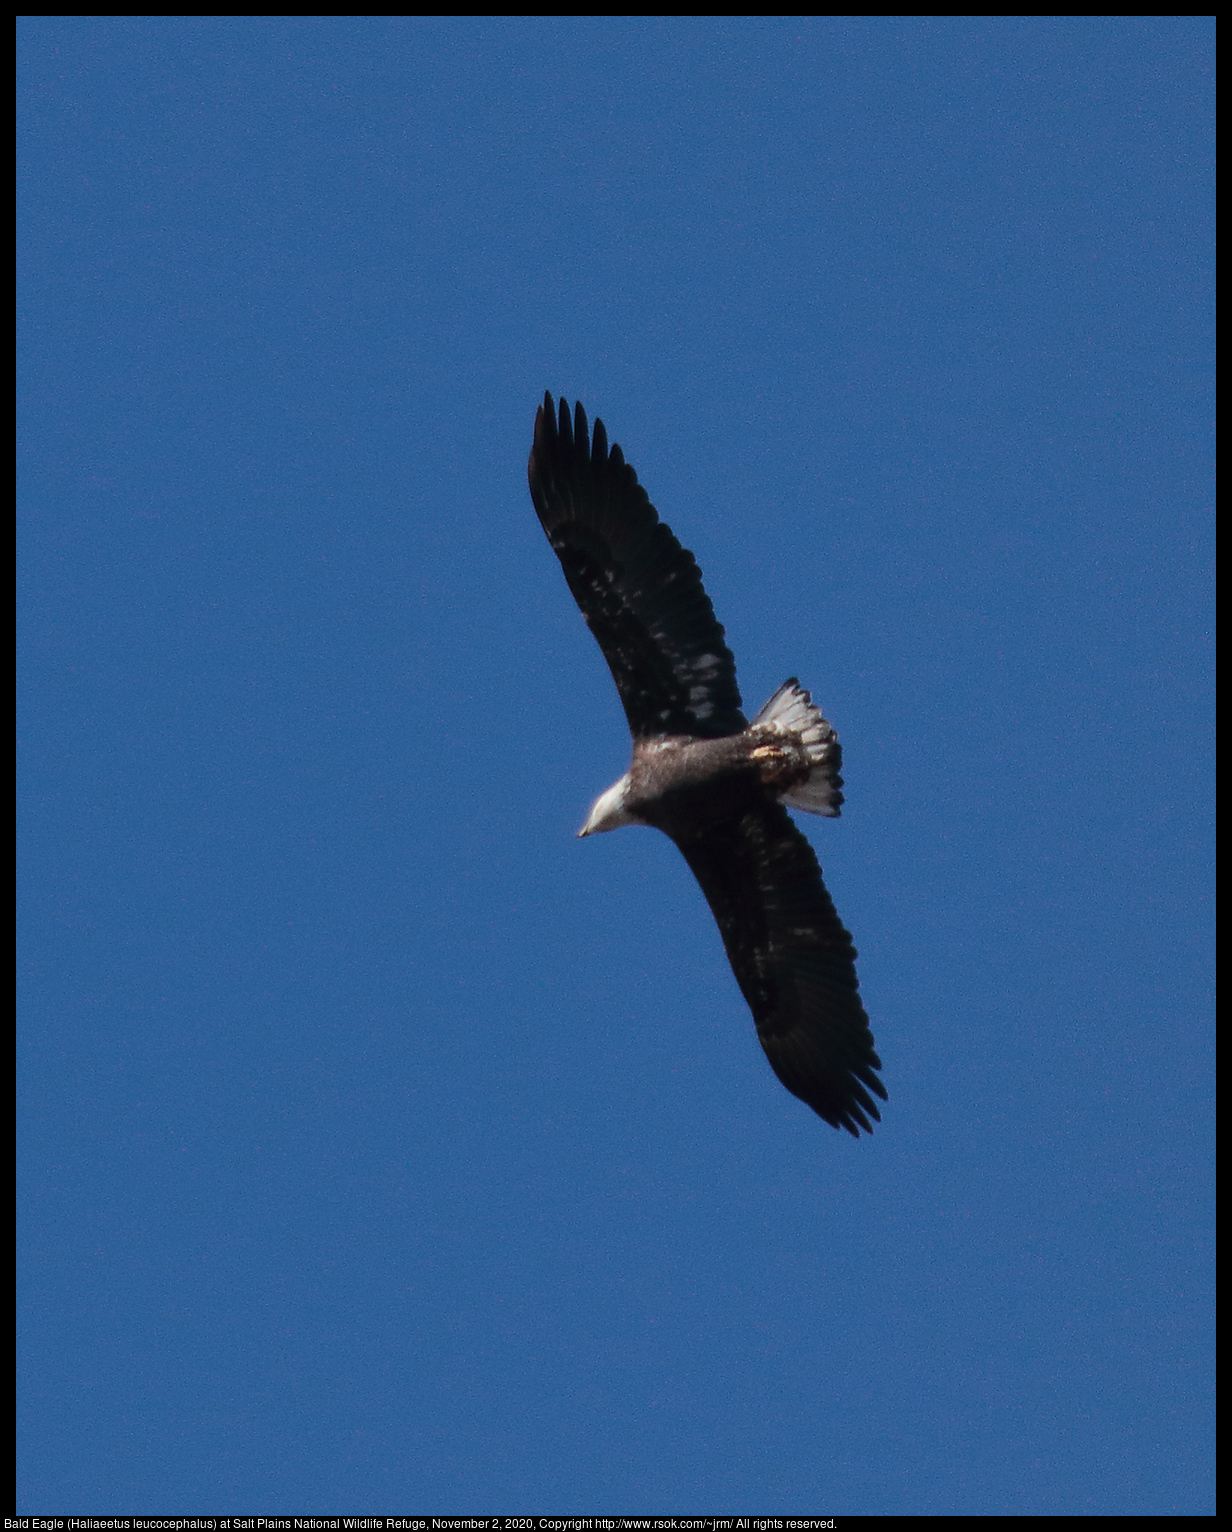 Bald Eagle (Haliaeetus leucocephalus) at Salt Plains National Wildlife Refuge, November 2, 2020